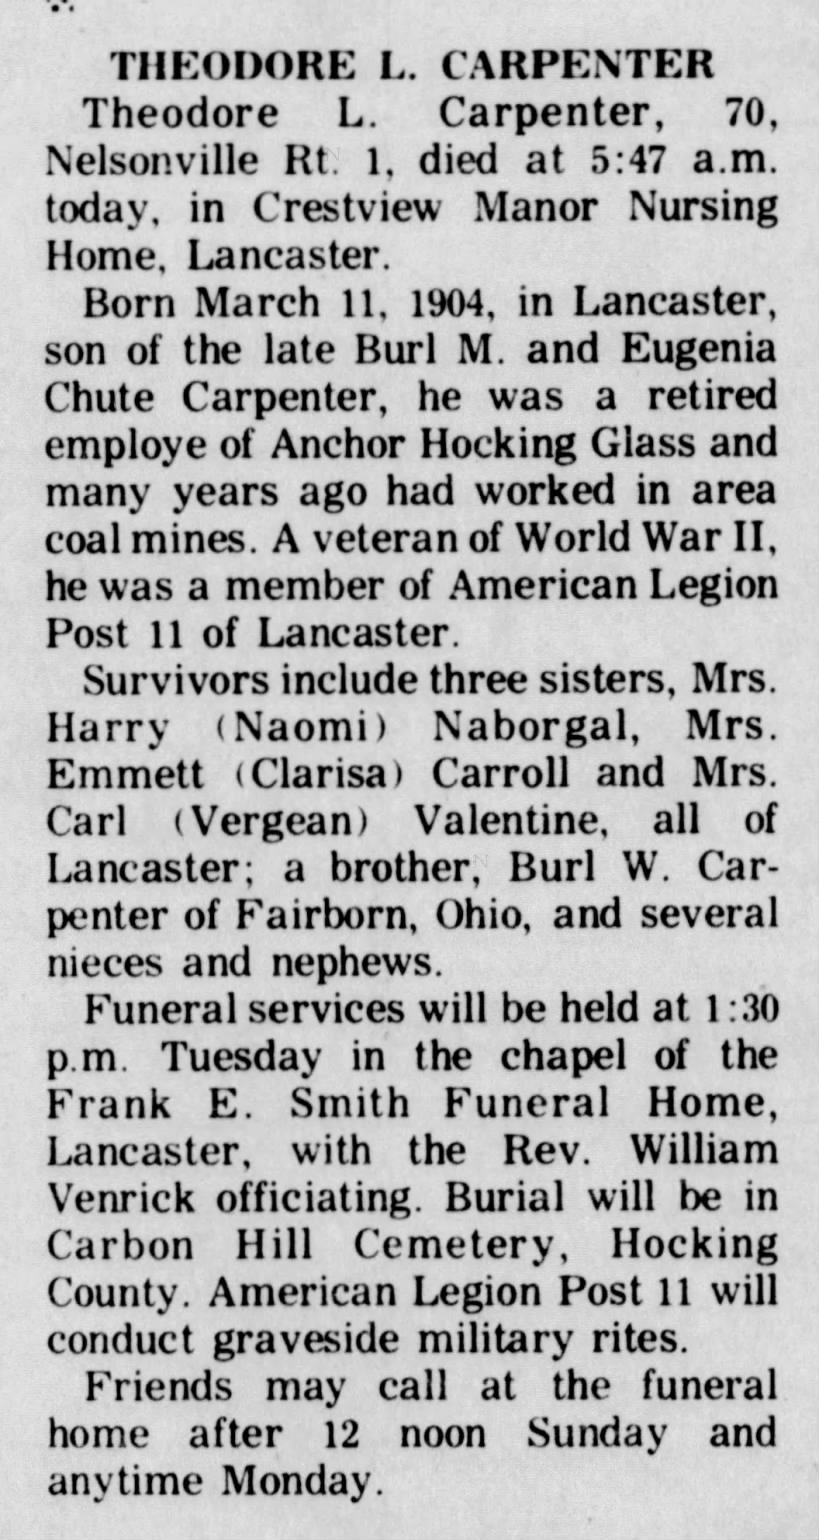 Obituary for Theodore L Carpenter - The Logan Daily News (Logan, Ohio) - Dec 7, 1974